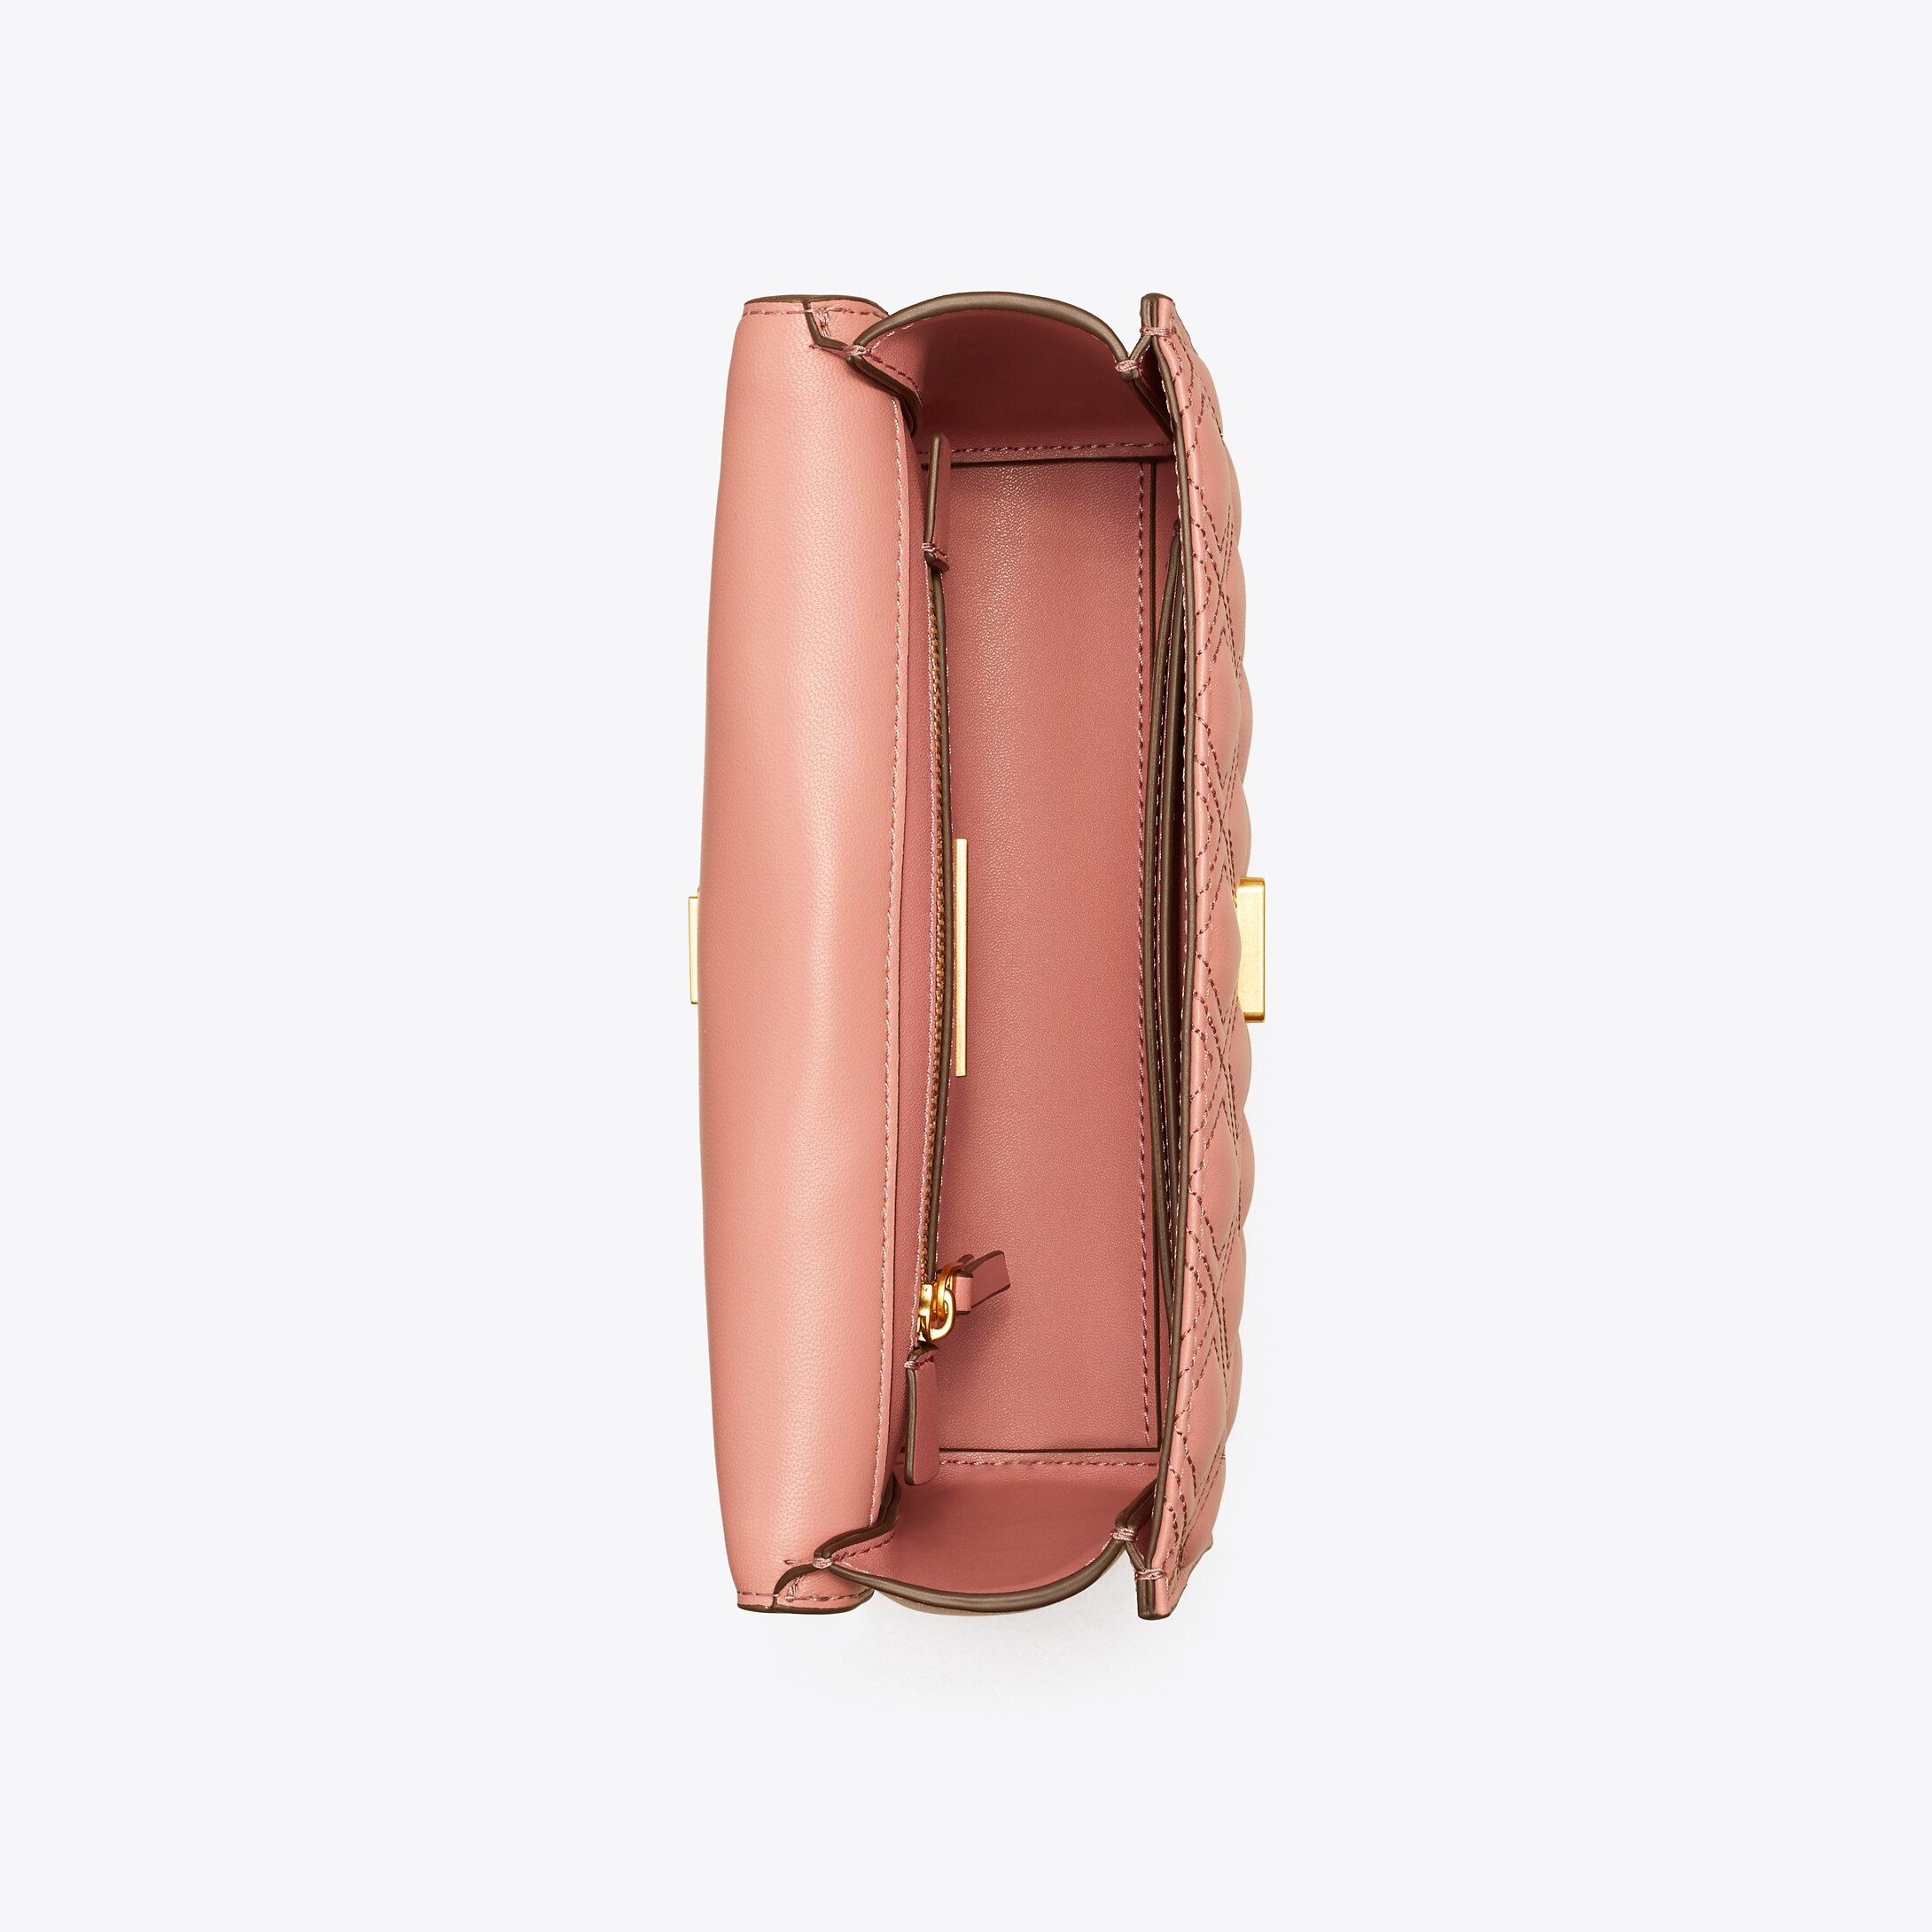 Tory Burch Fleming Convertible Shoulder Bag in Pink